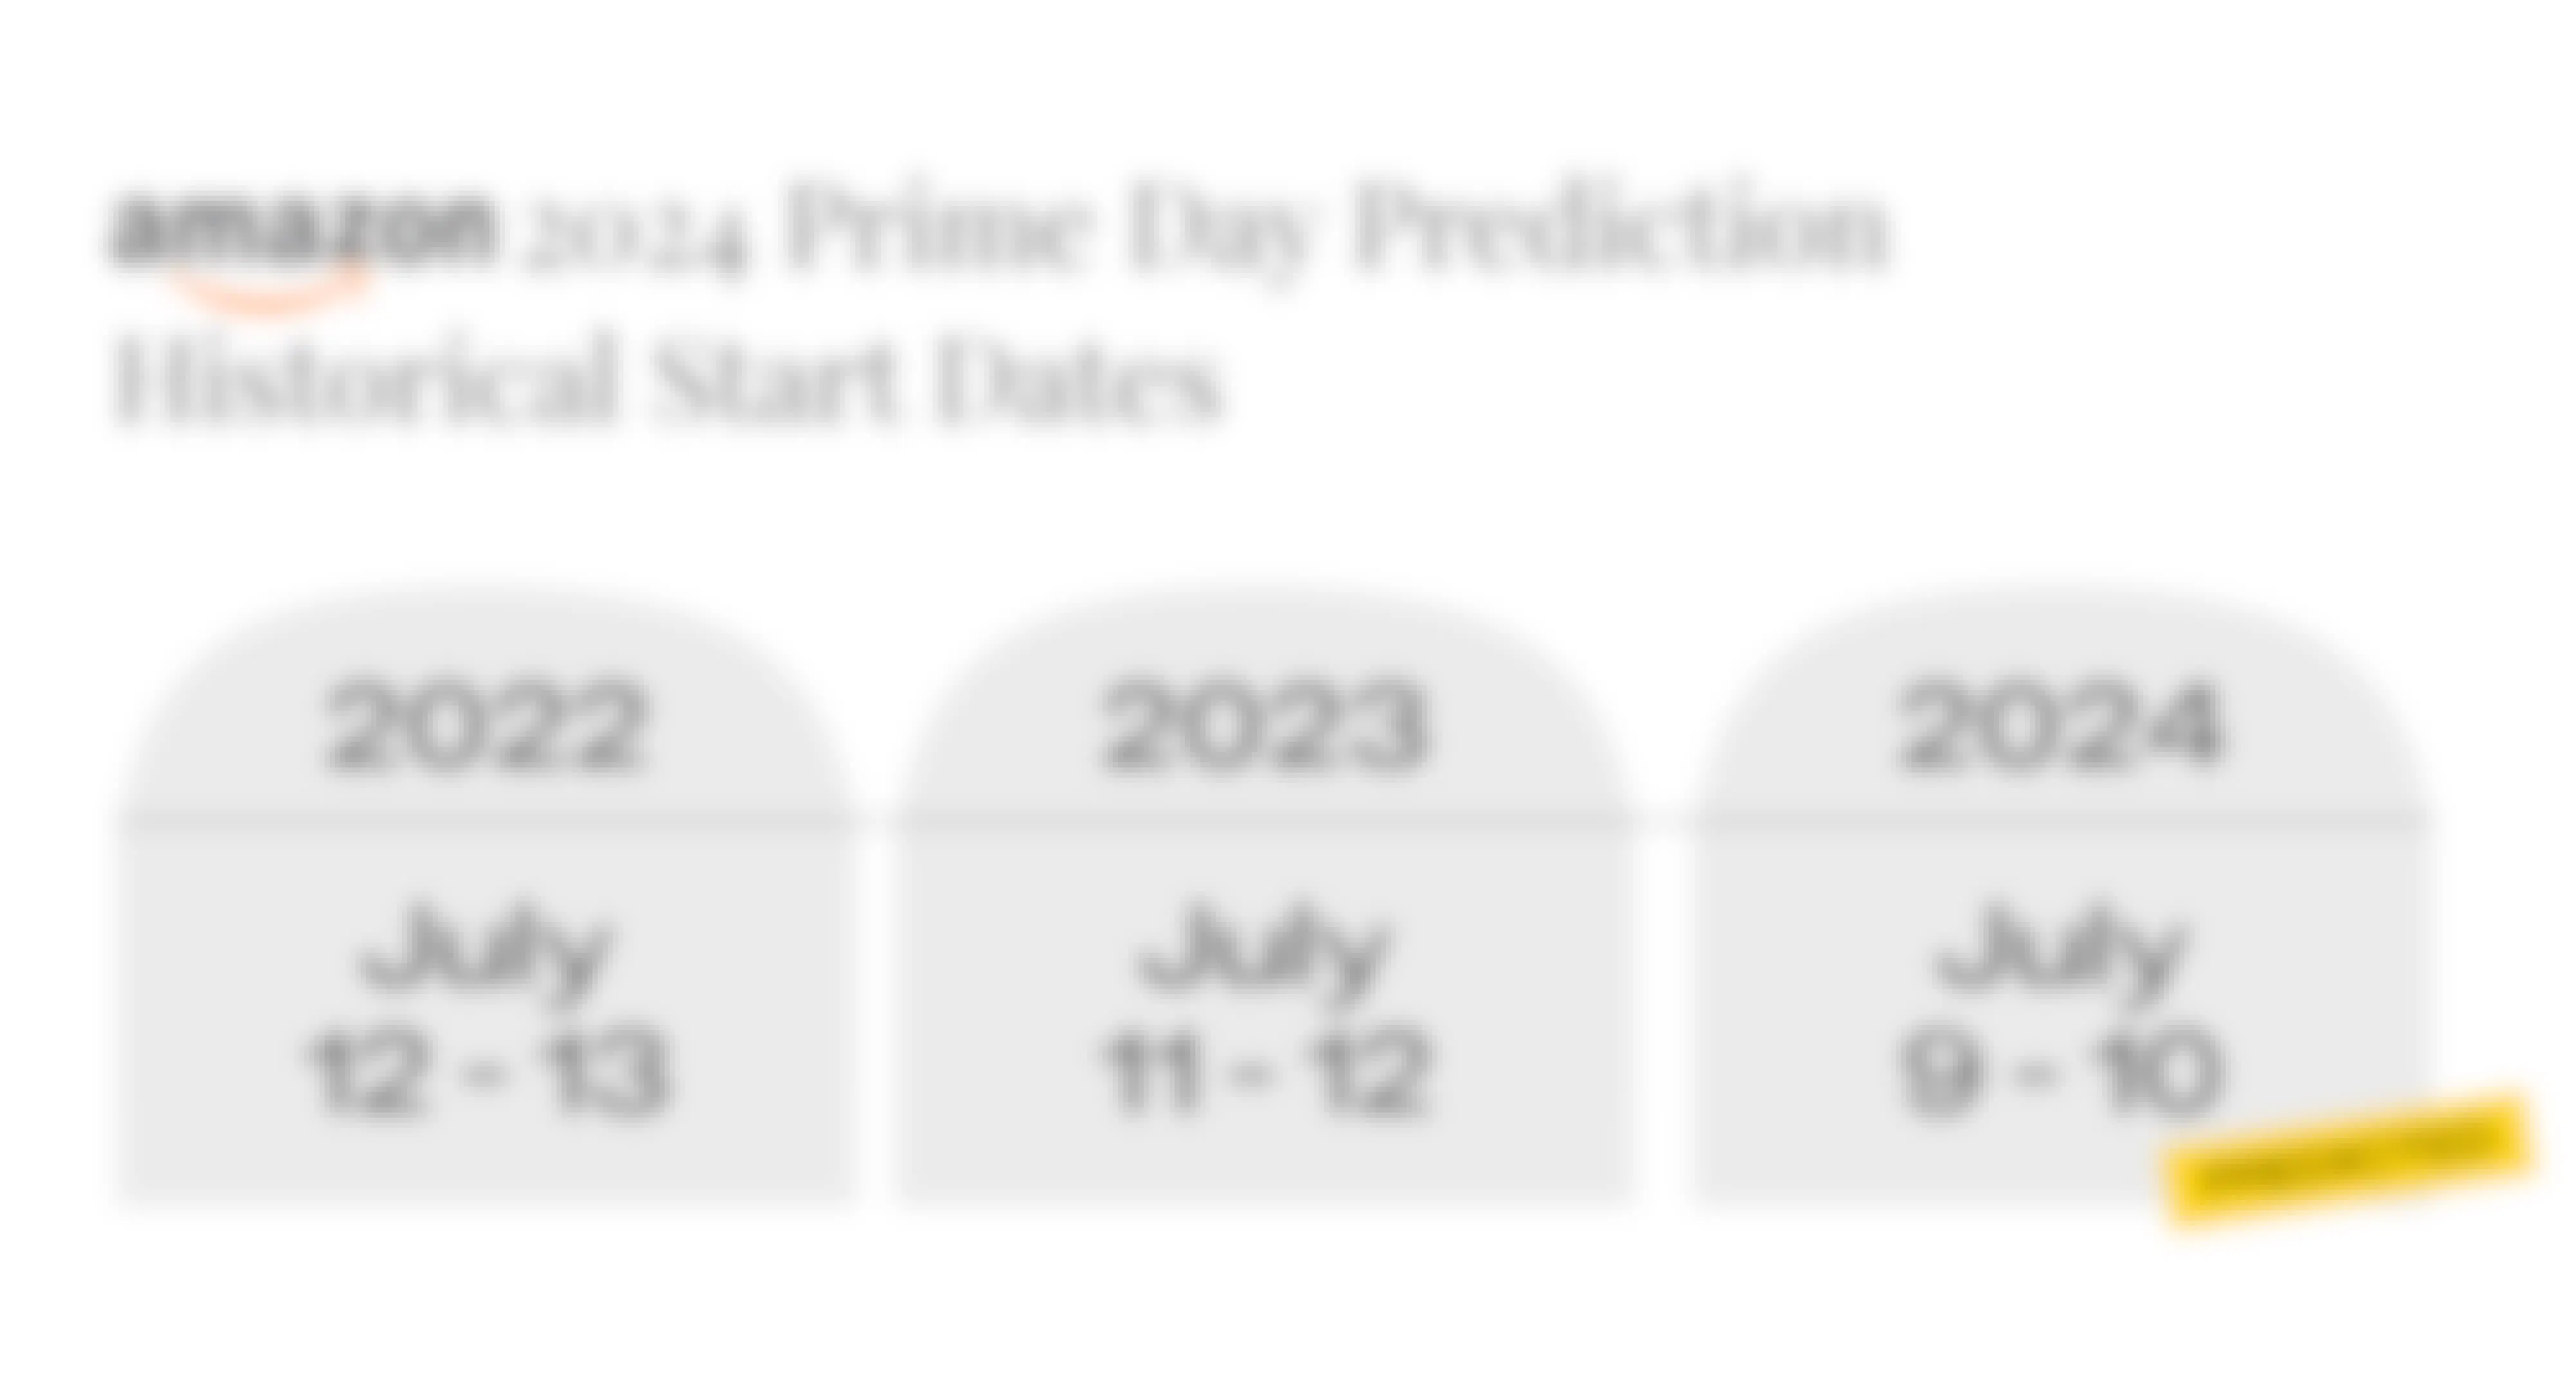 2024 amazon prime day predictions